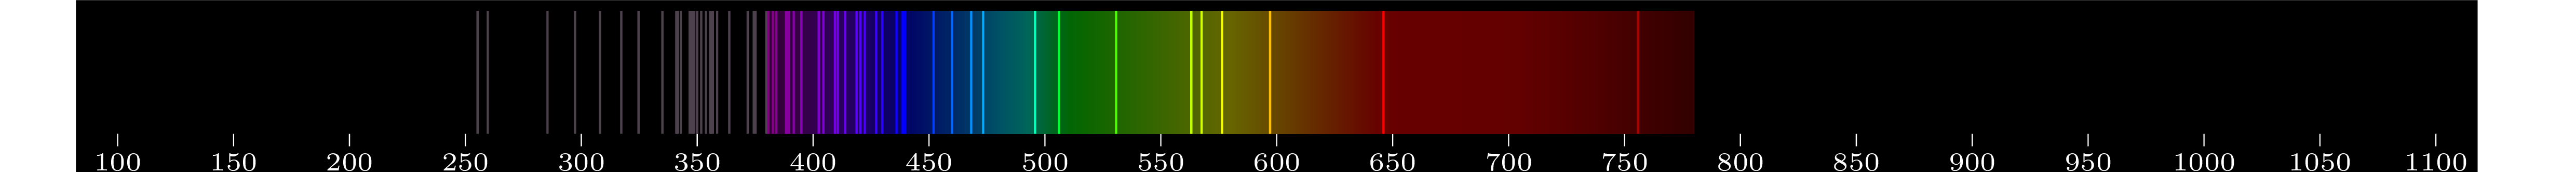 emmision spectra of element Tm